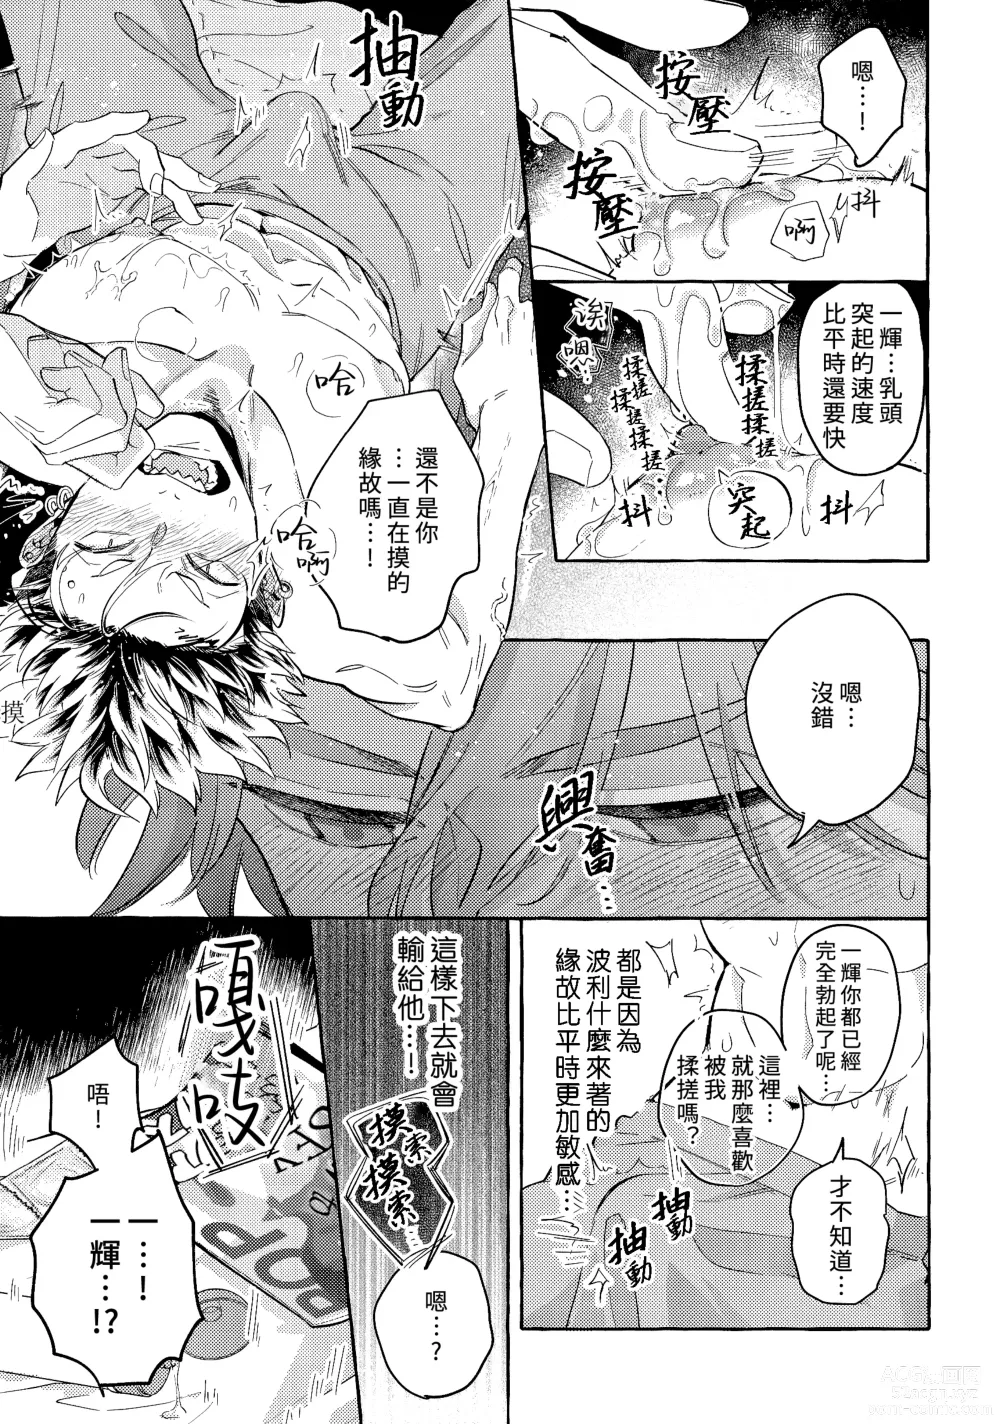 Page 16 of doujinshi skip run!run!run! (uncensored)